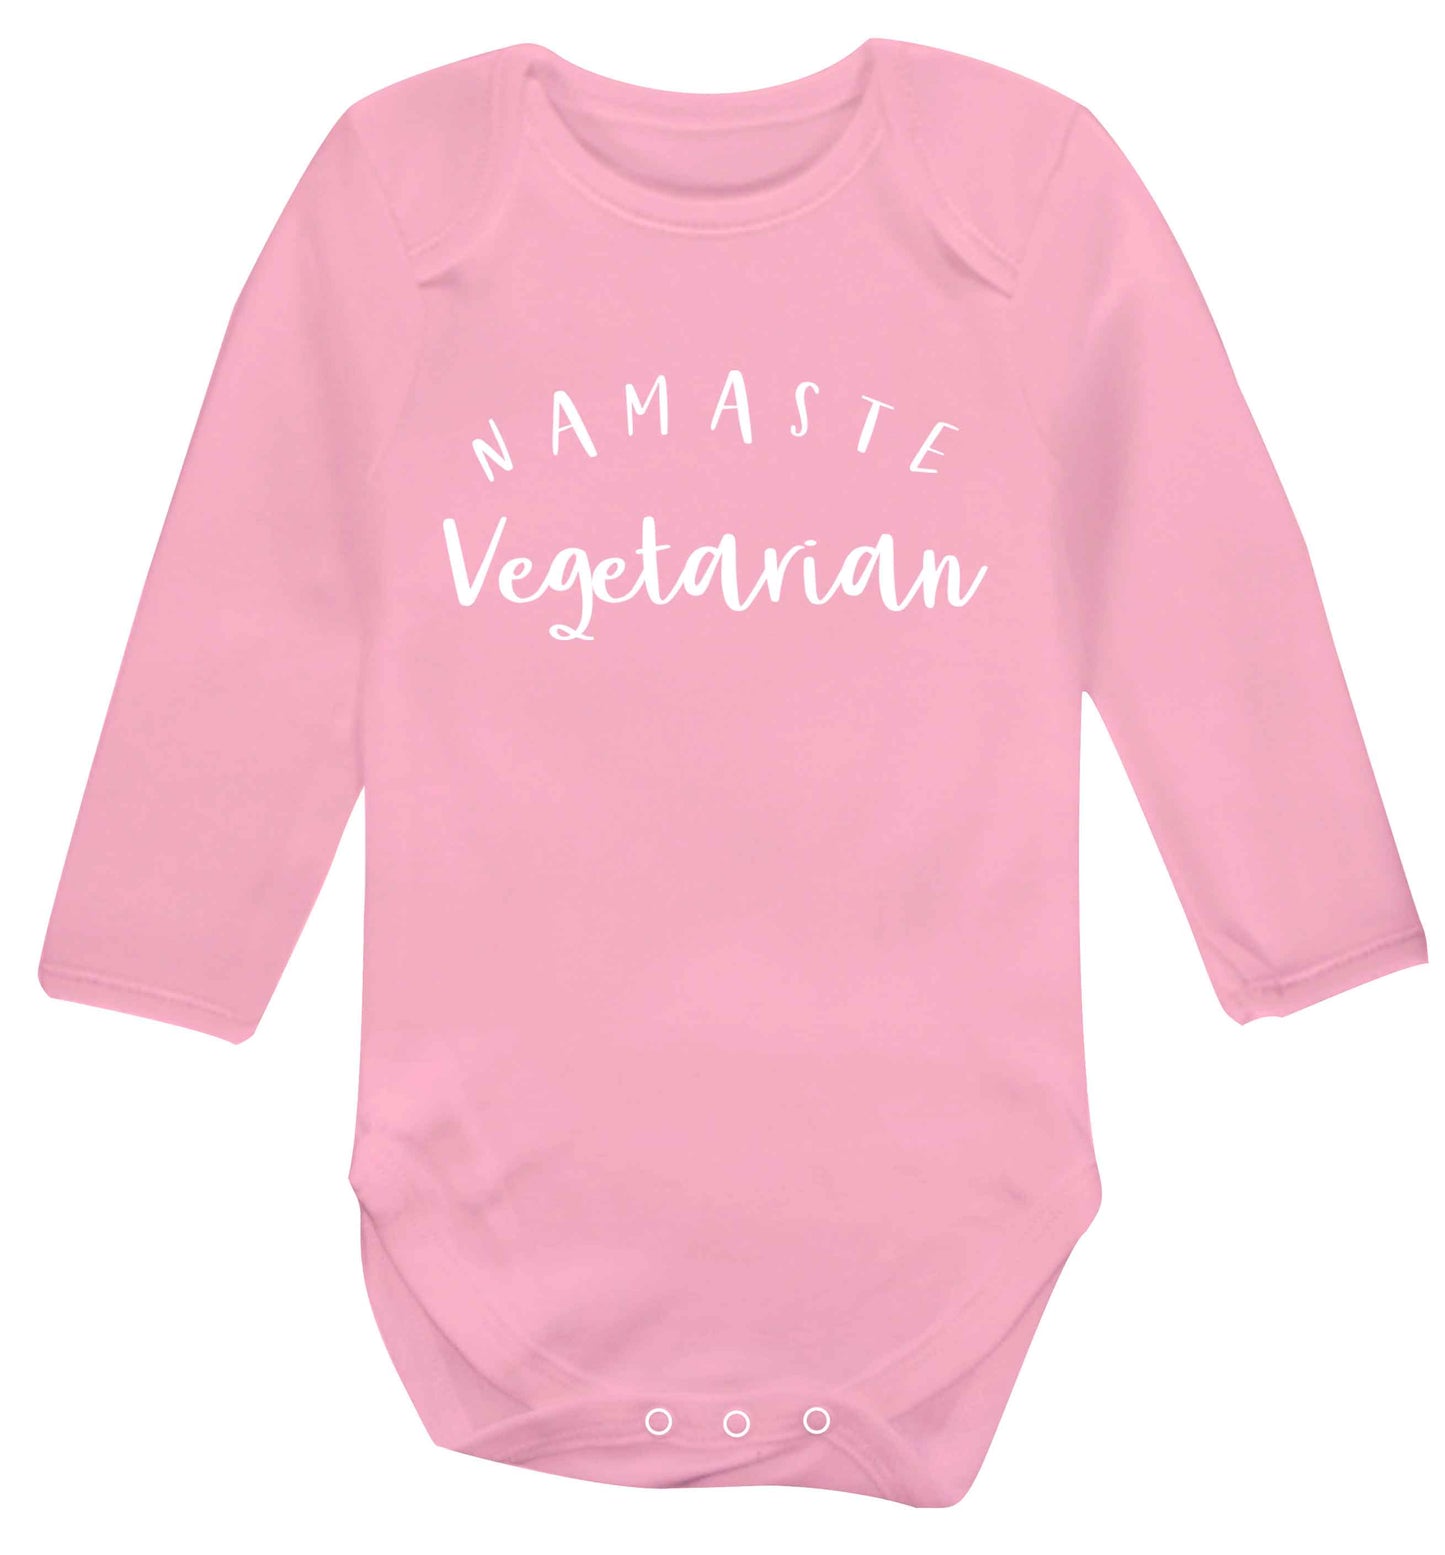 Namaste vegetarian Baby Vest long sleeved pale pink 6-12 months